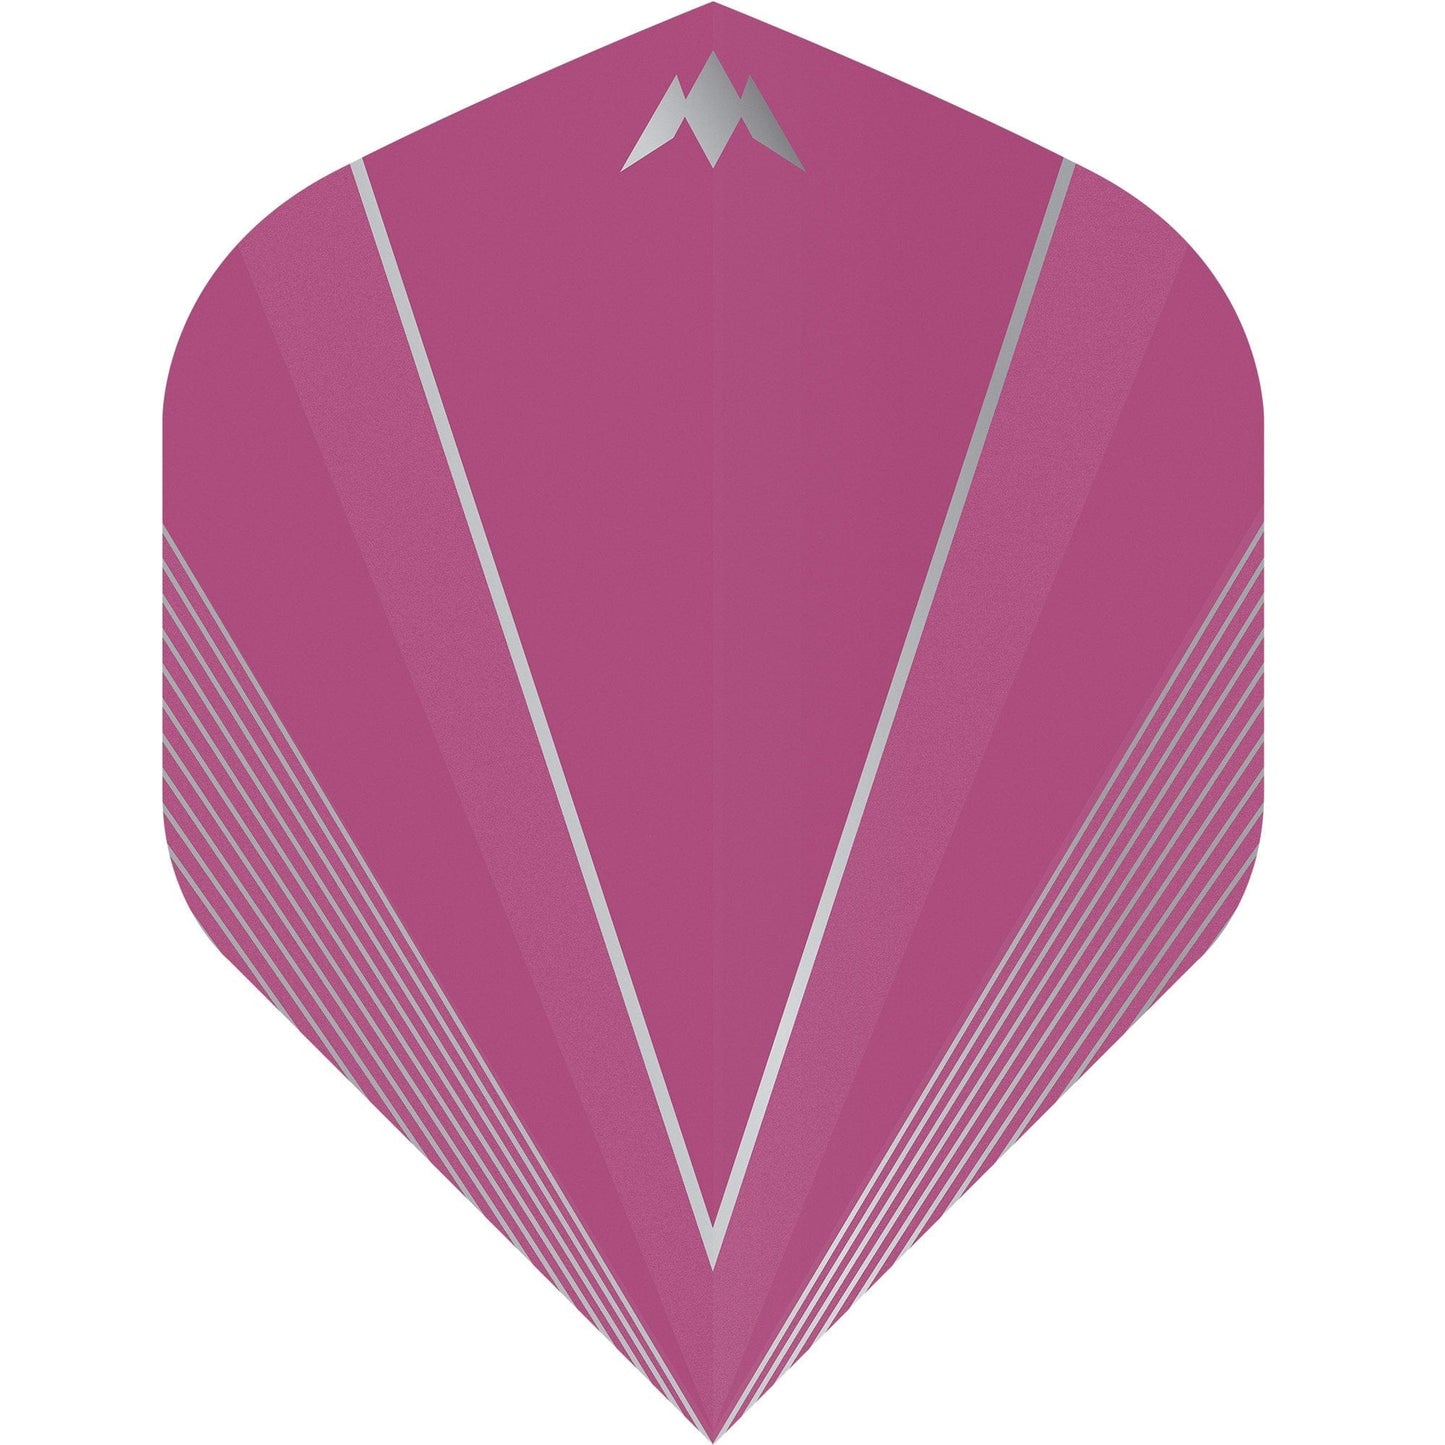 Mission Shades Dart Flights - 100 Micron - No2 - Std Pink